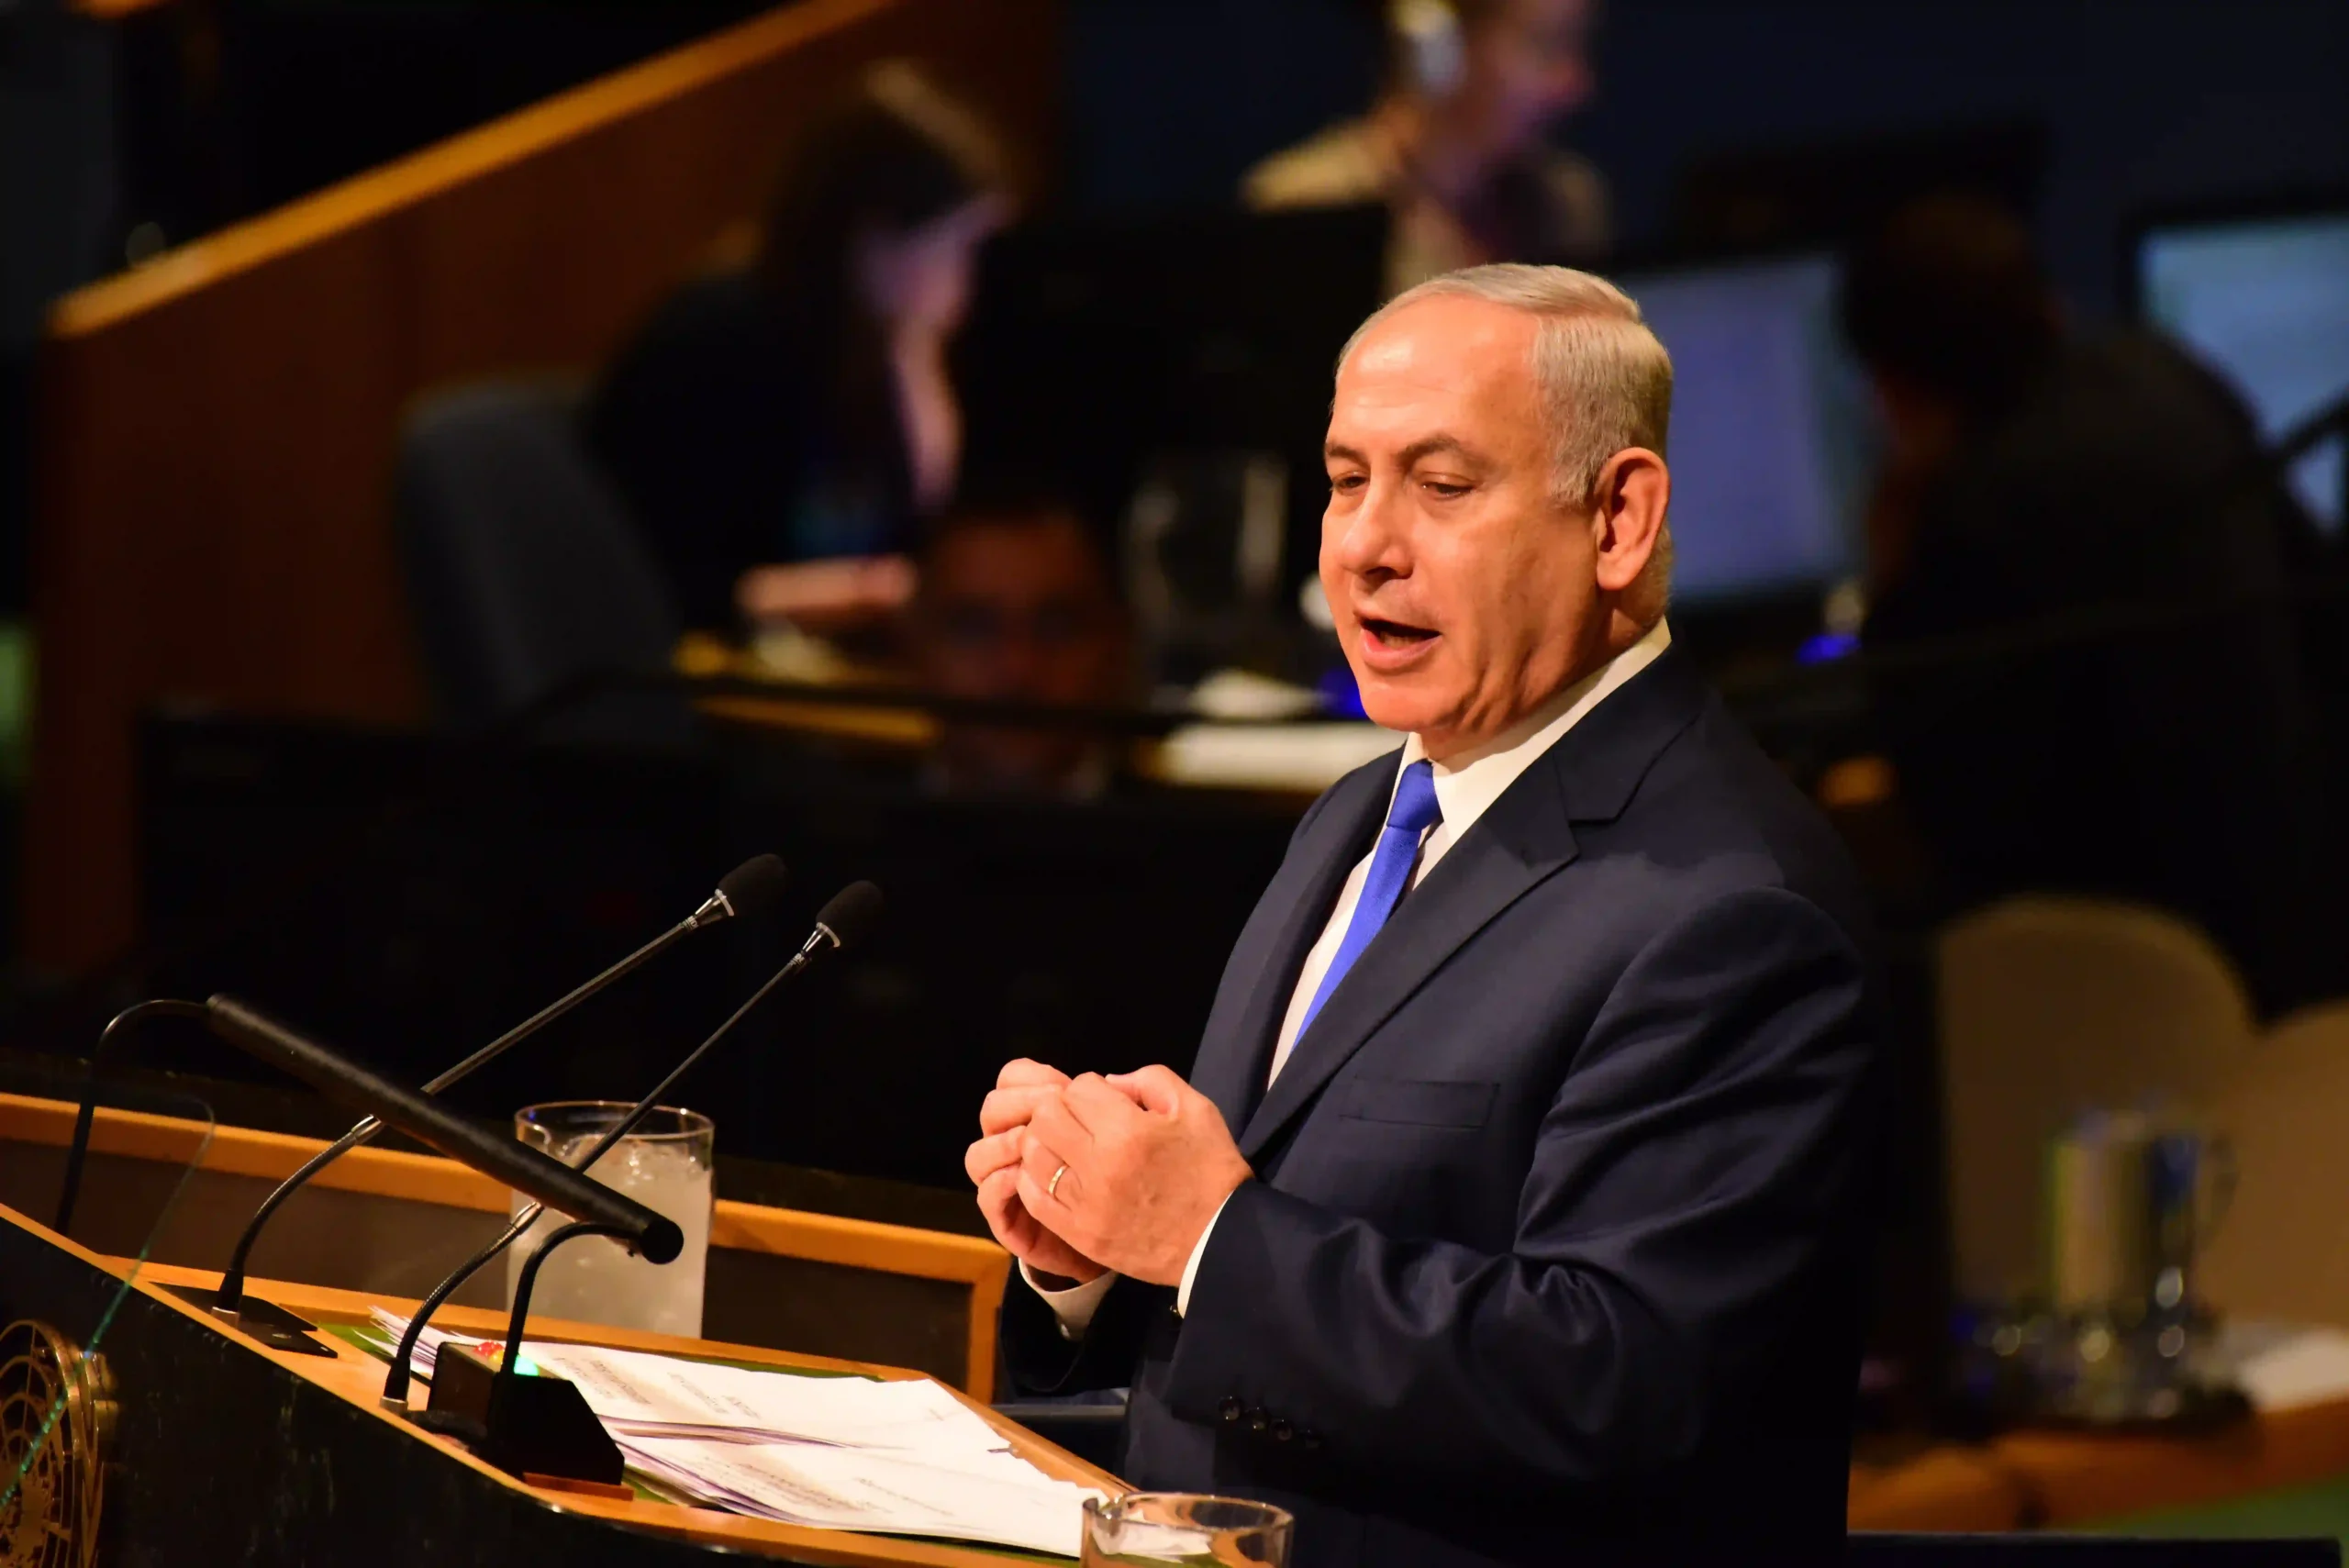 Netanyahu and the Art of Storytelling